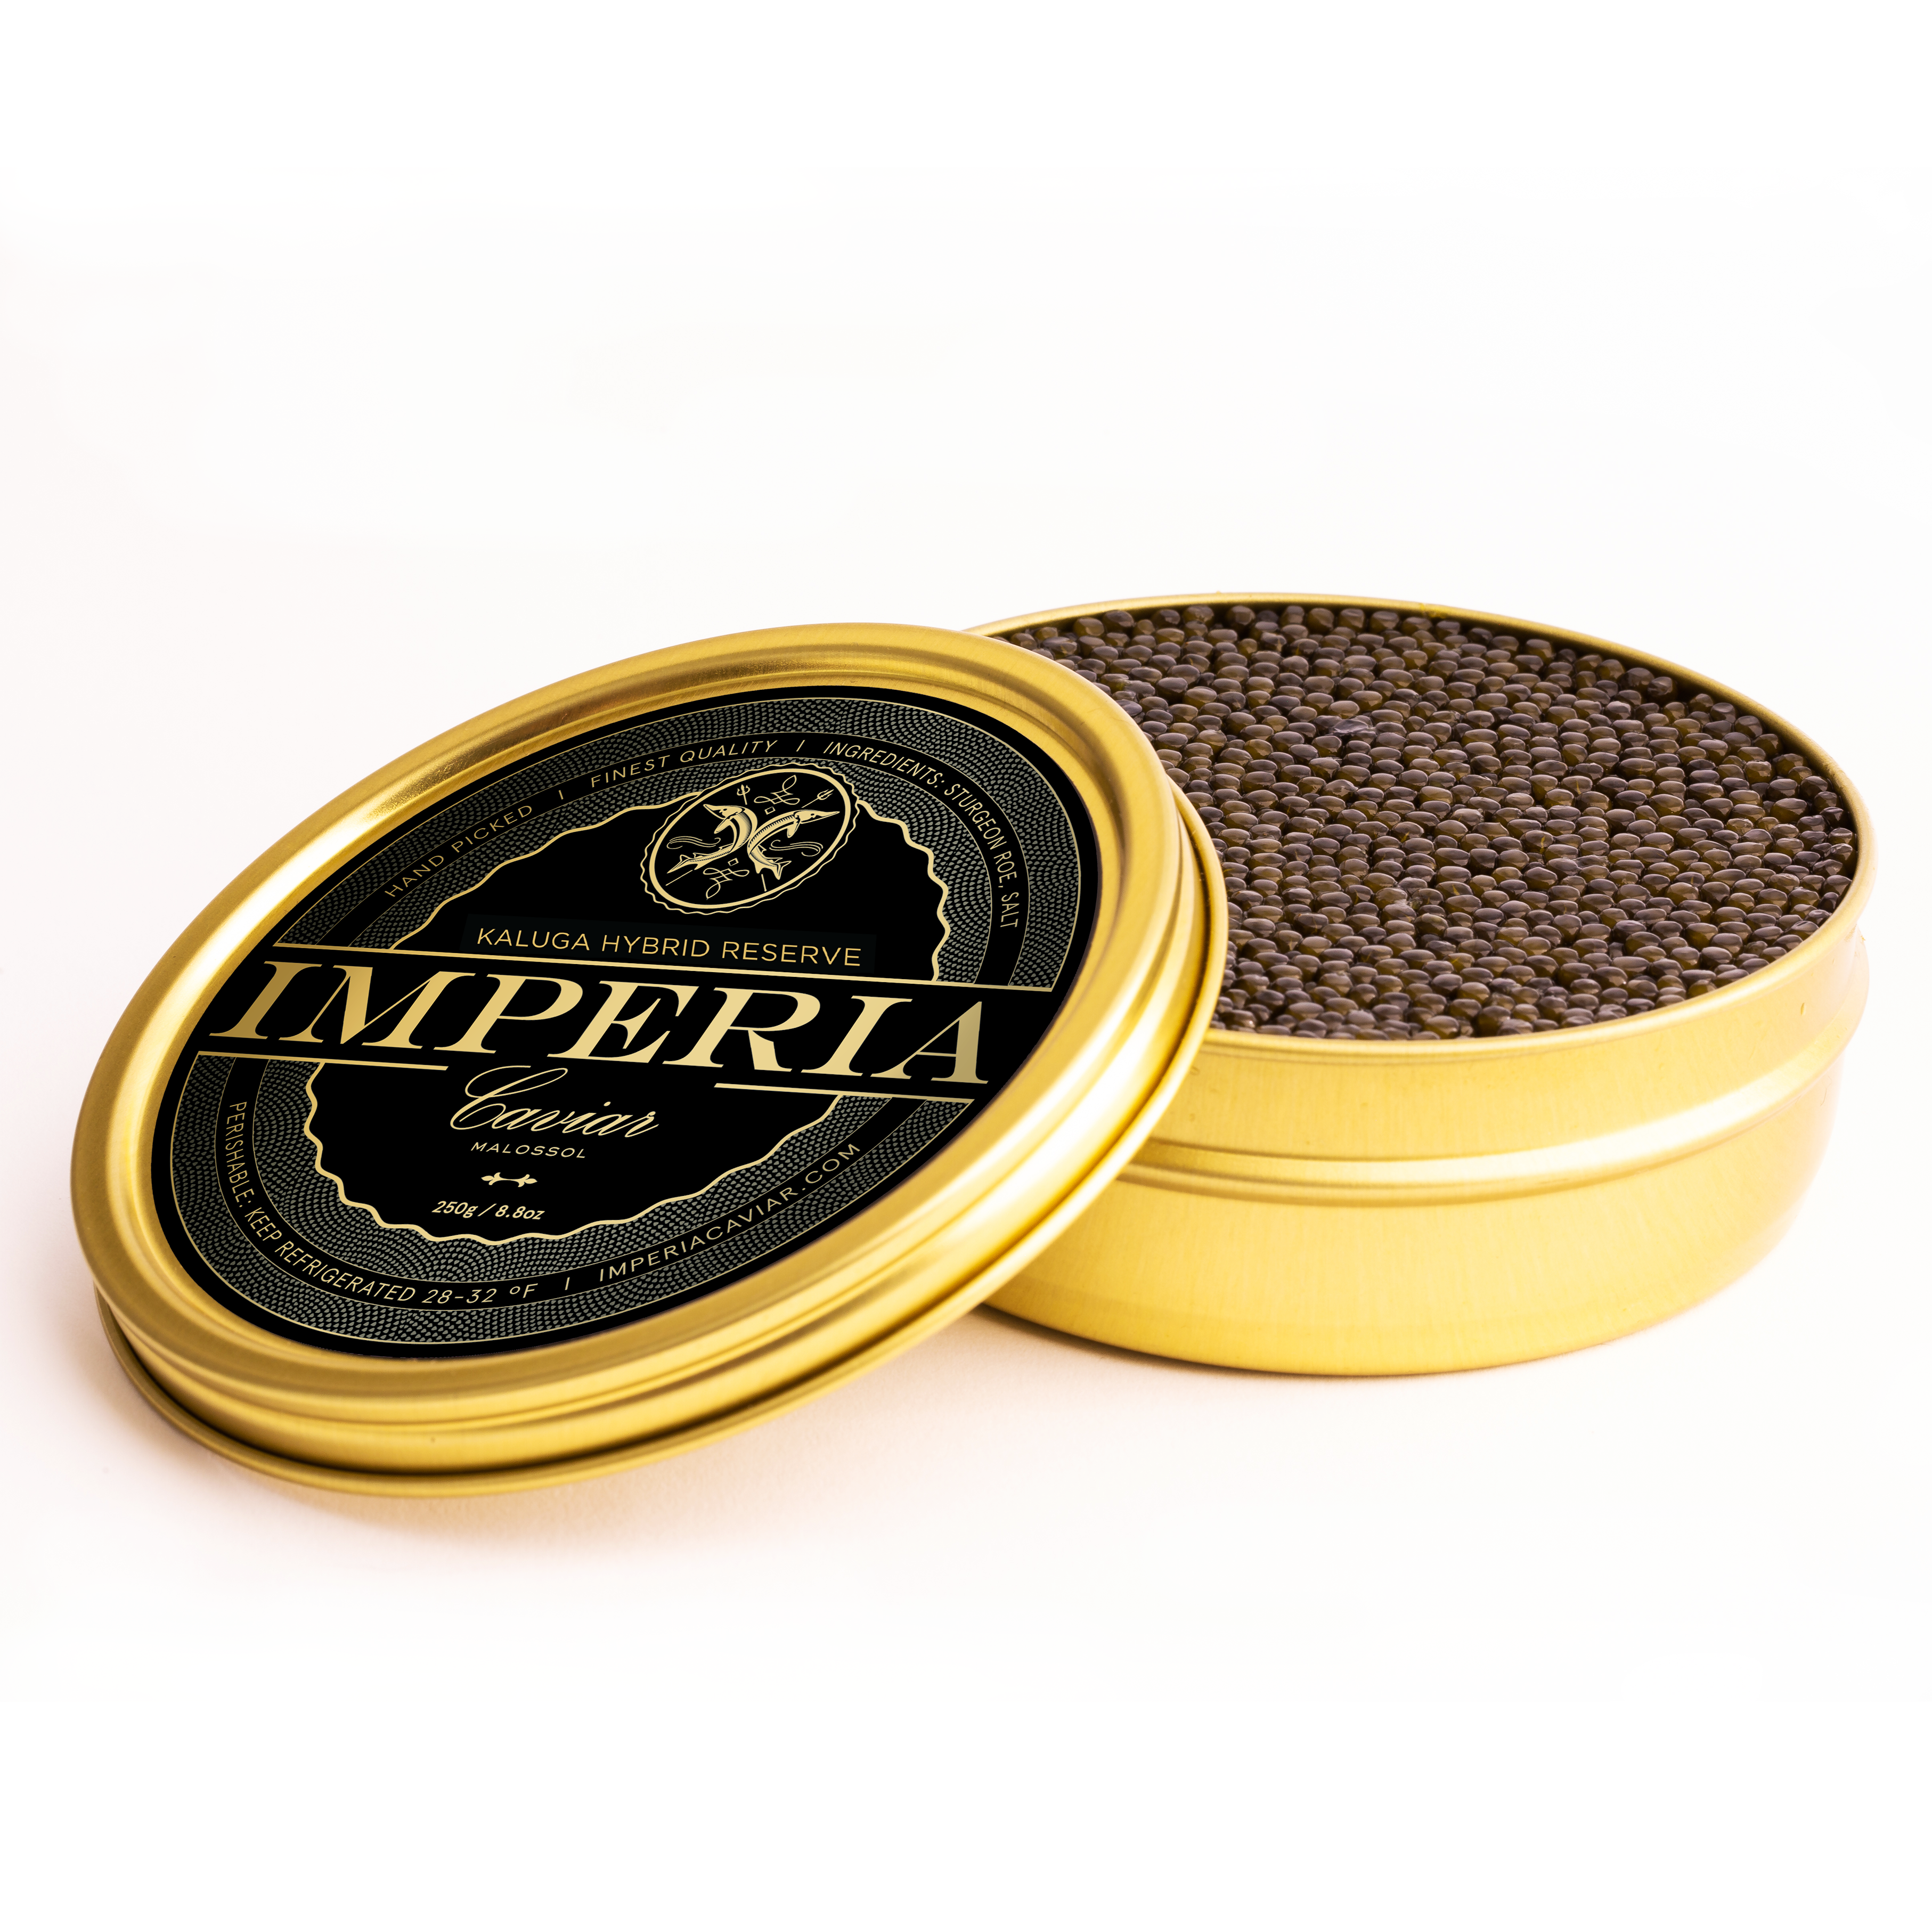 River Beluga Hybrid Caviar  Petrusco – petrusco-caviar